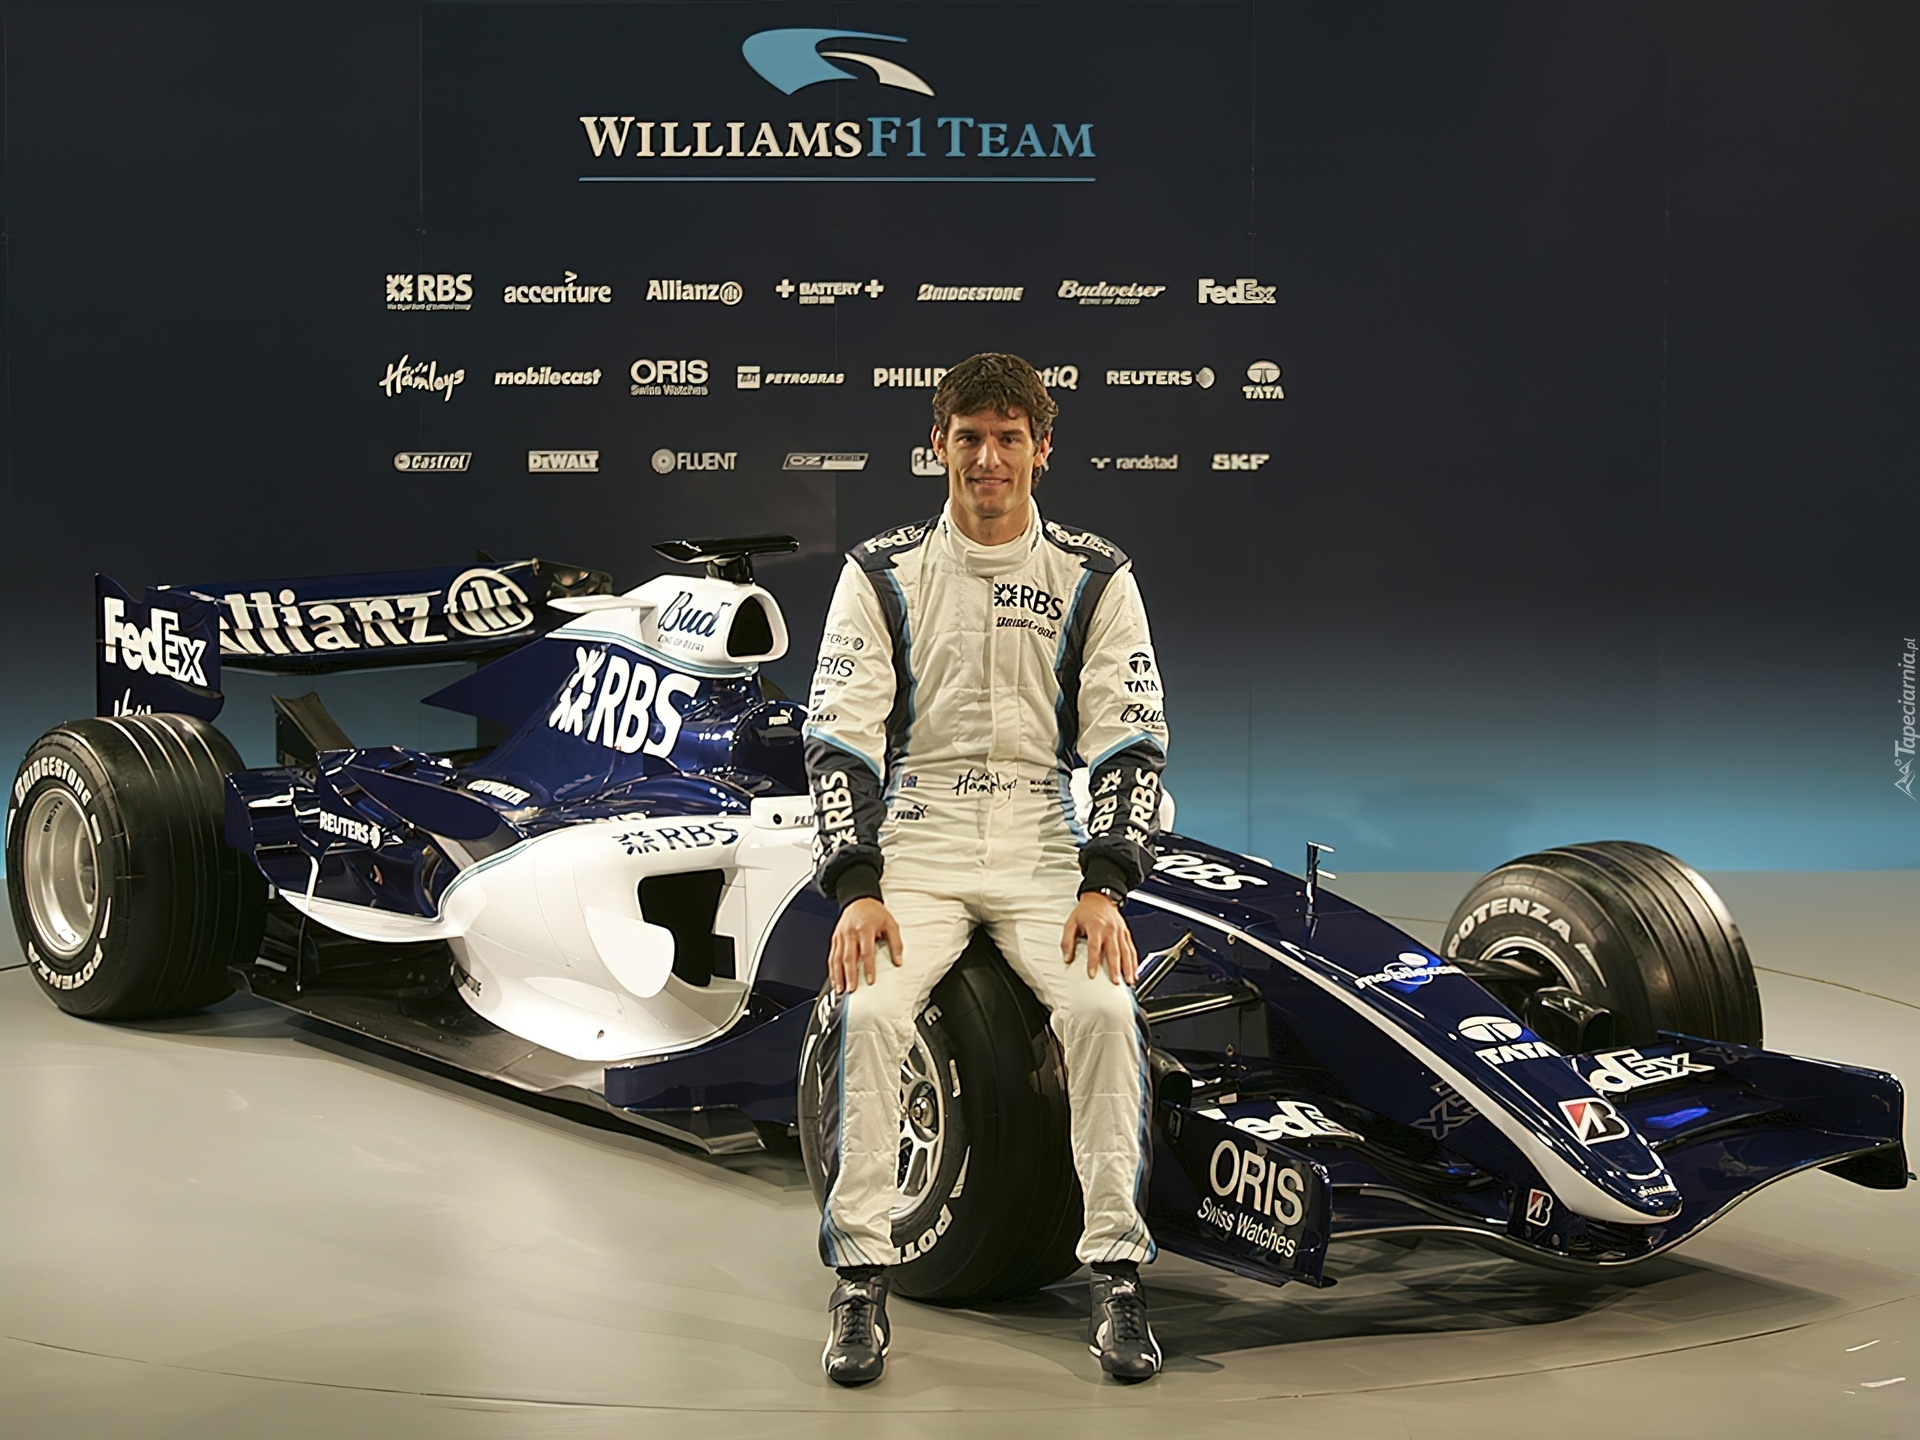 Formuła 1,bolid, kierowca, Williams team